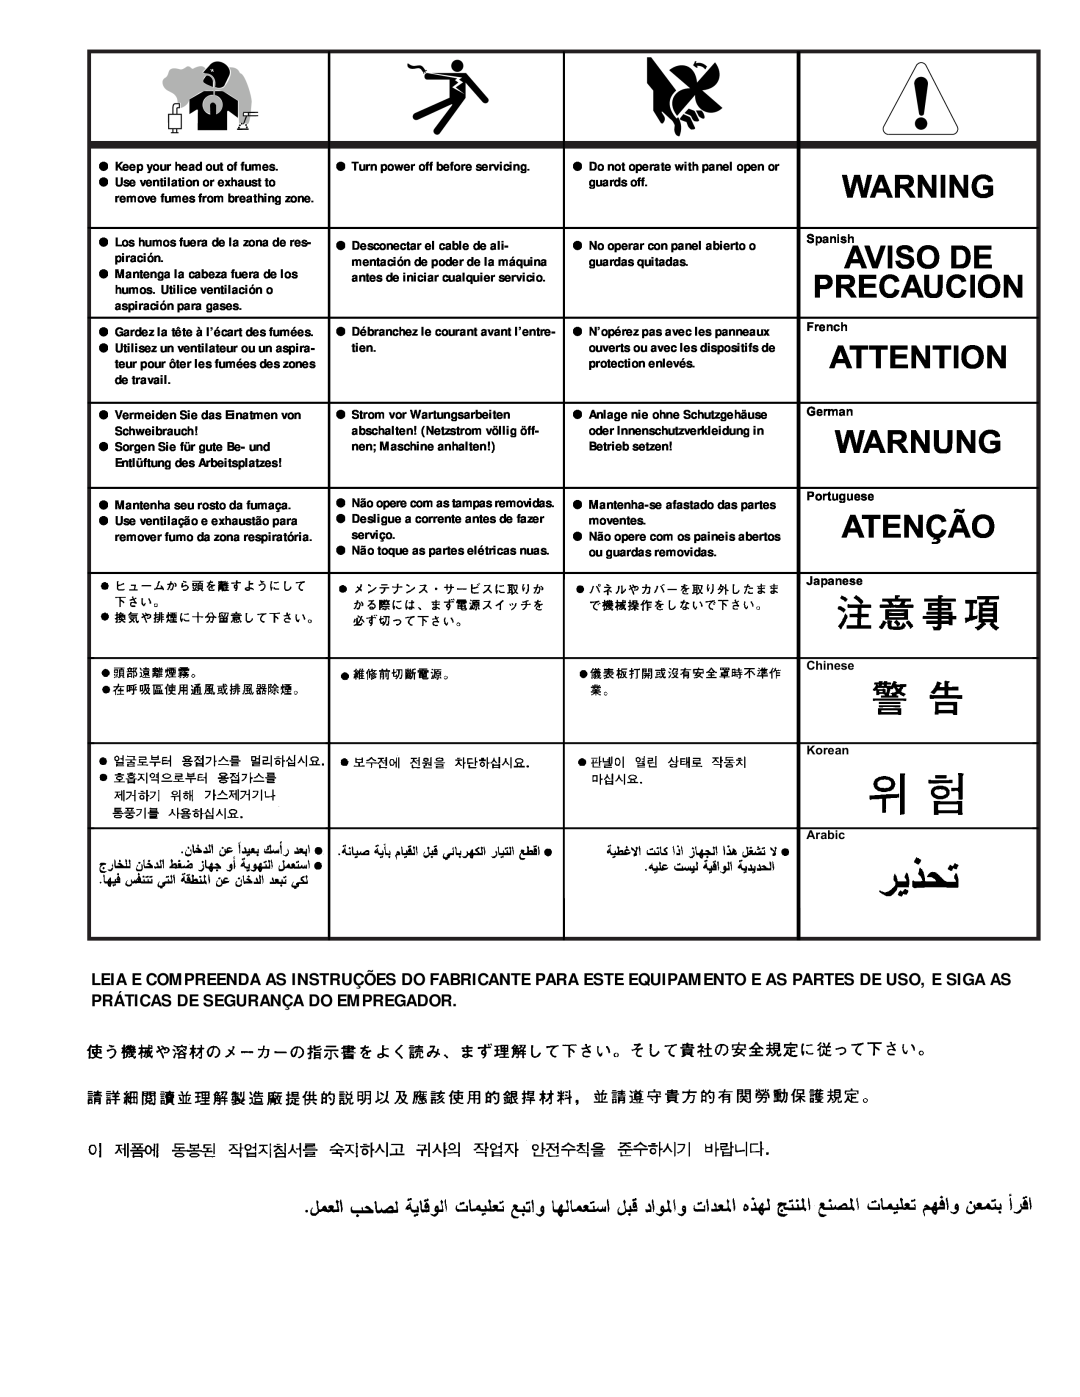 Lincoln Electric IM583-A manual Warnung, Atenção, Precaucion, Aviso De, Keep your head out of fumes 